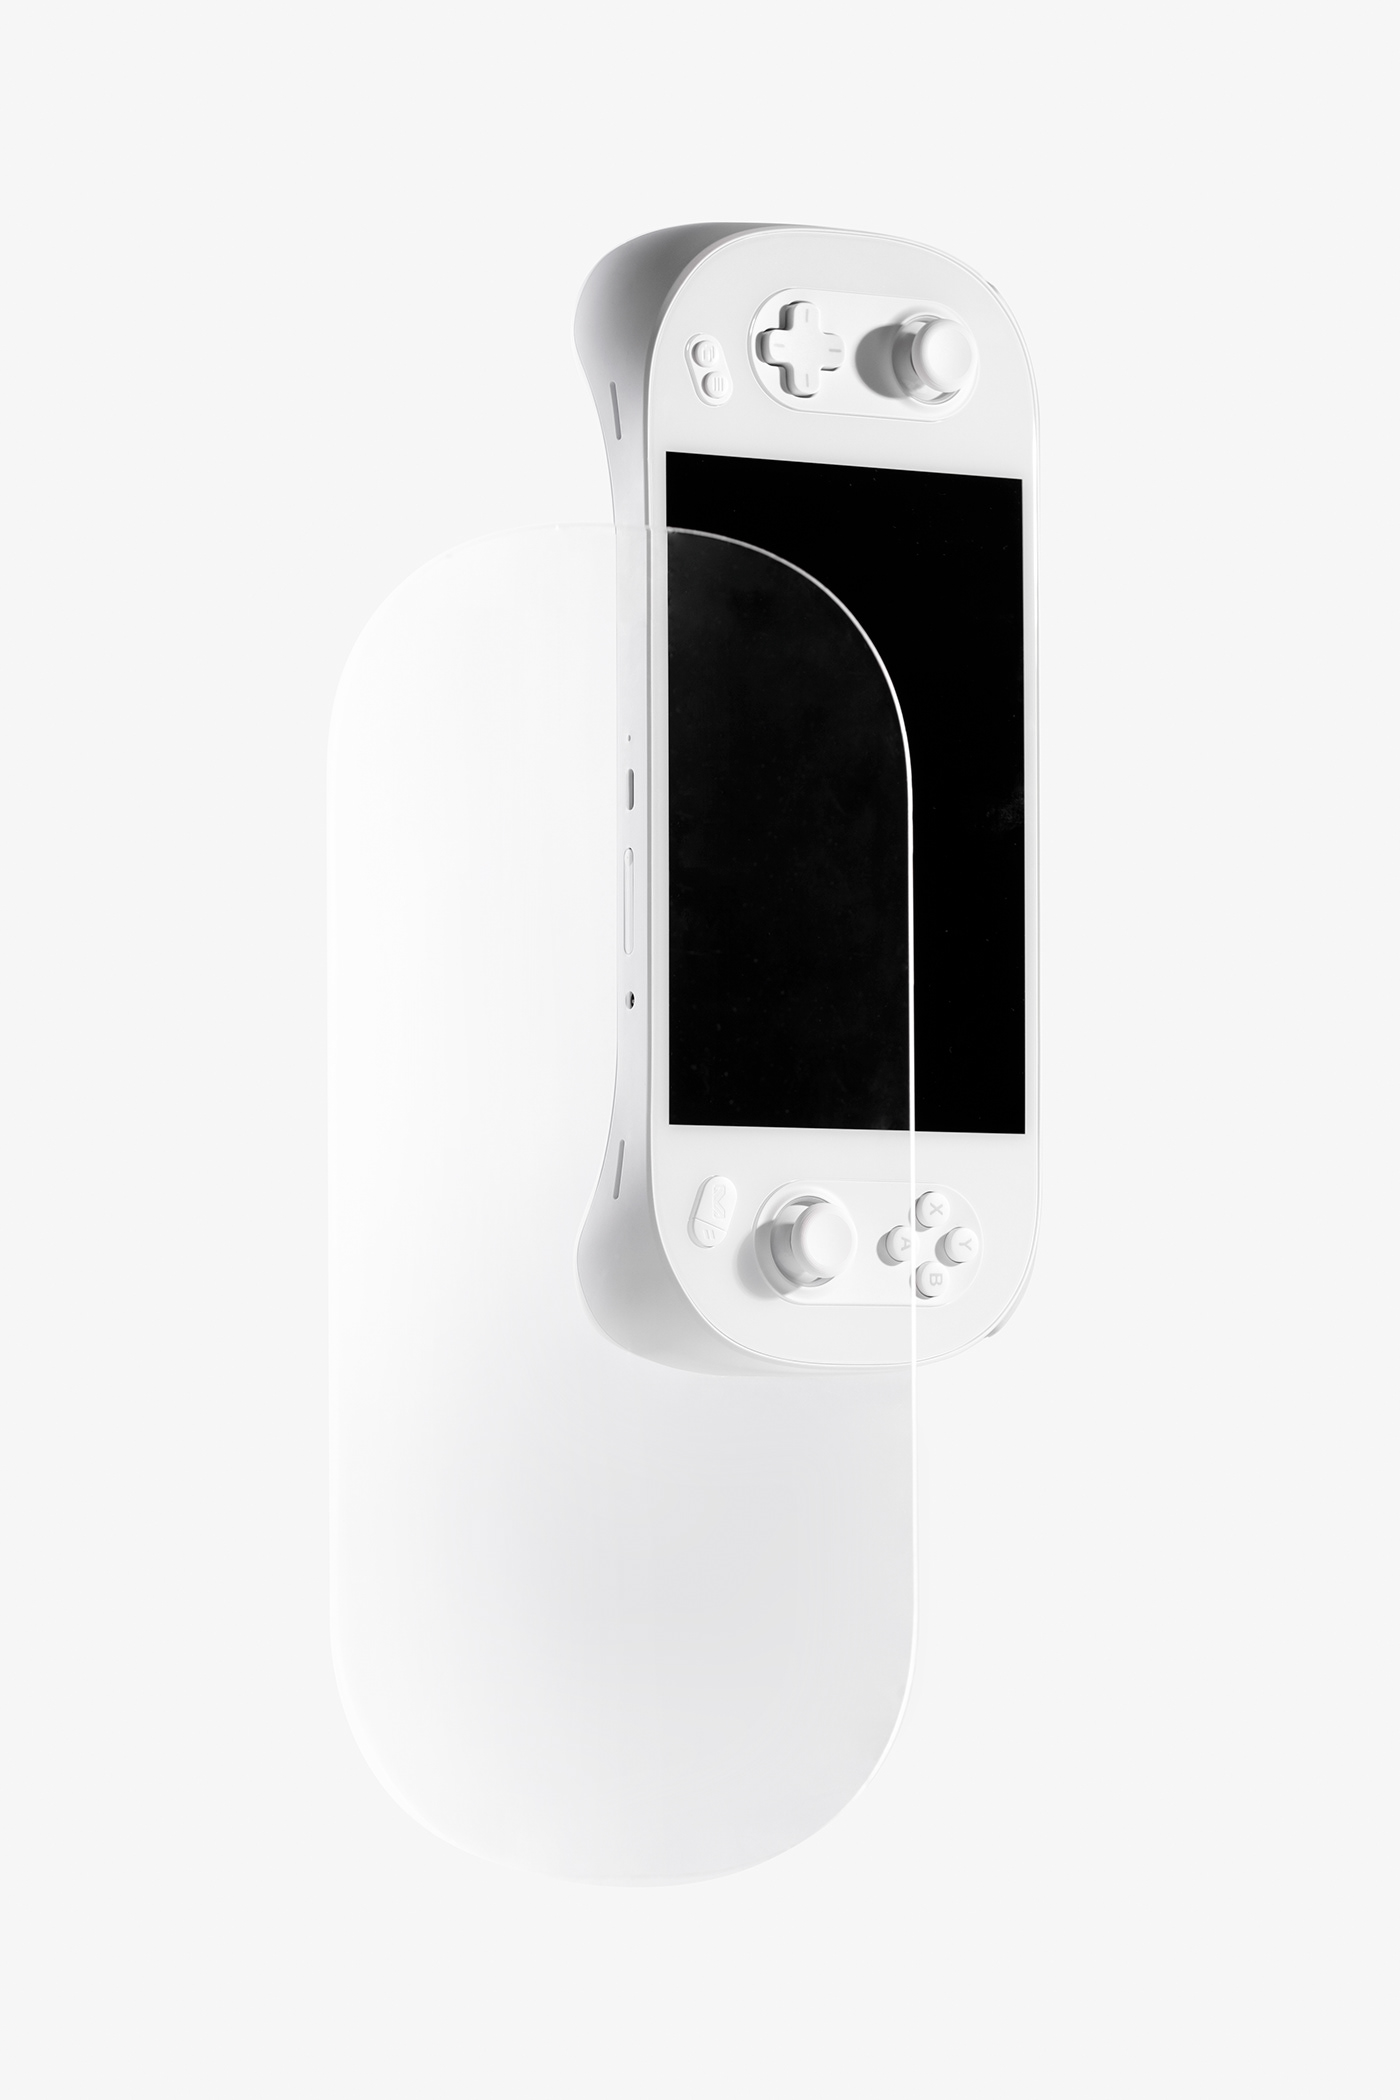 design future Gaming handheld industrial design  product design  surface design #ayaneo second white secondwhite